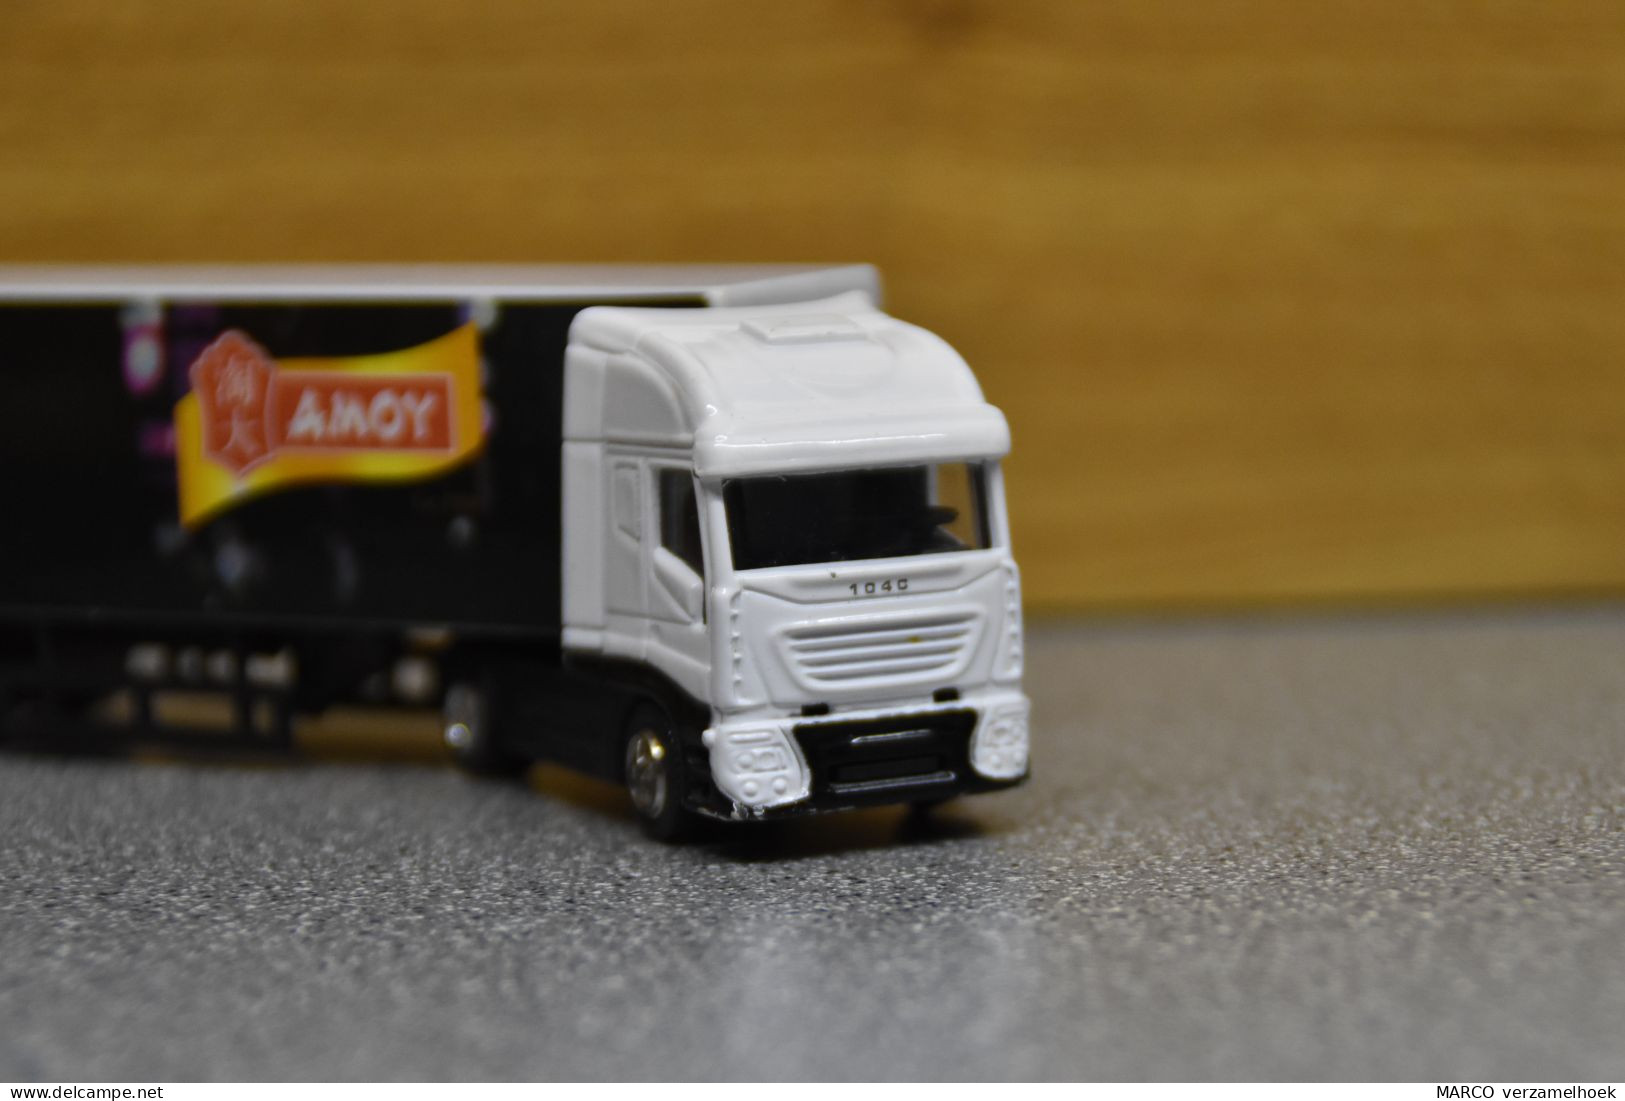 AMOY Truck 1040 EMTÉ/jan Linders Supermarkten Scale 1:87 - Vrachtwagens, Bus En Werken